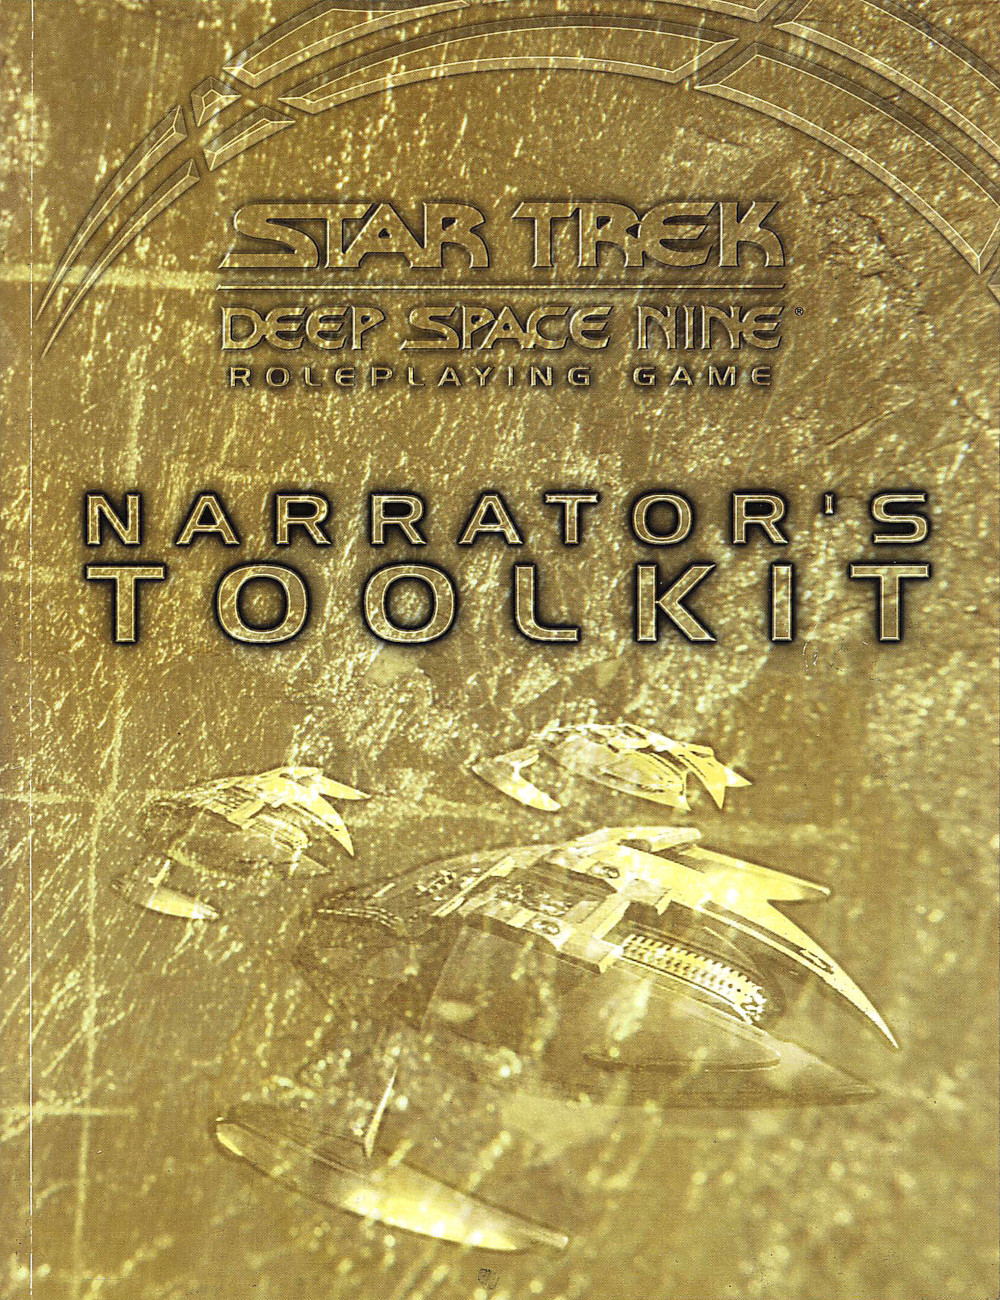 Shadows and Light: The Star Trek: Deep Space Nine Roleplaying Game Narrator's Toolkit (Jun 1999)